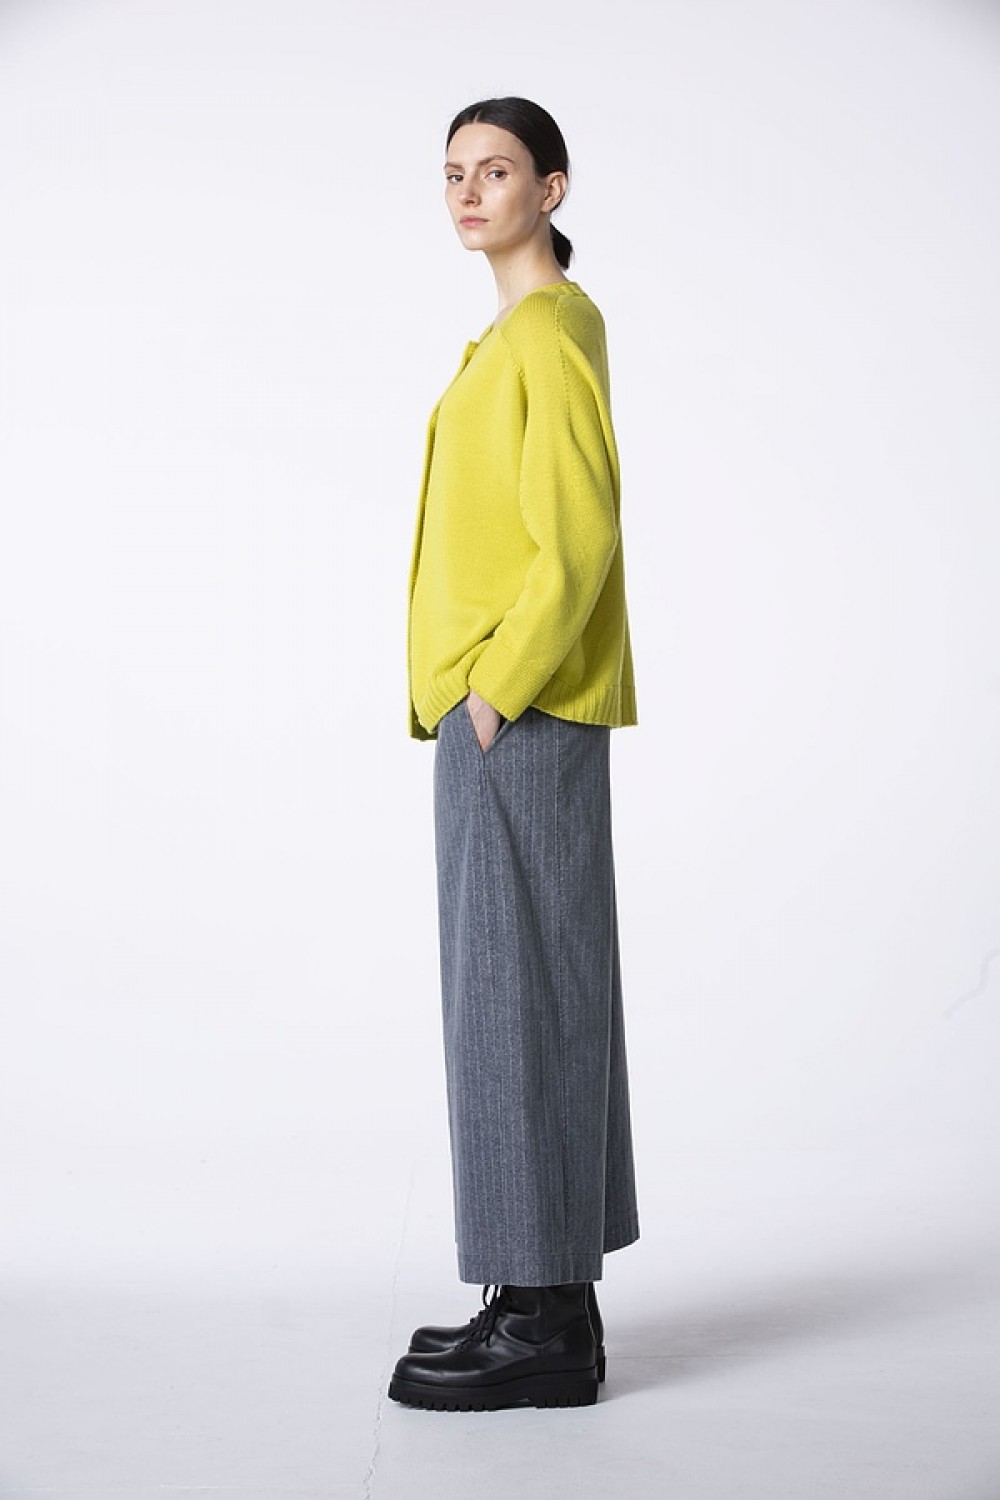 OSKA Jacket Kreaativ 310 Yellow / 100% Merino Wool